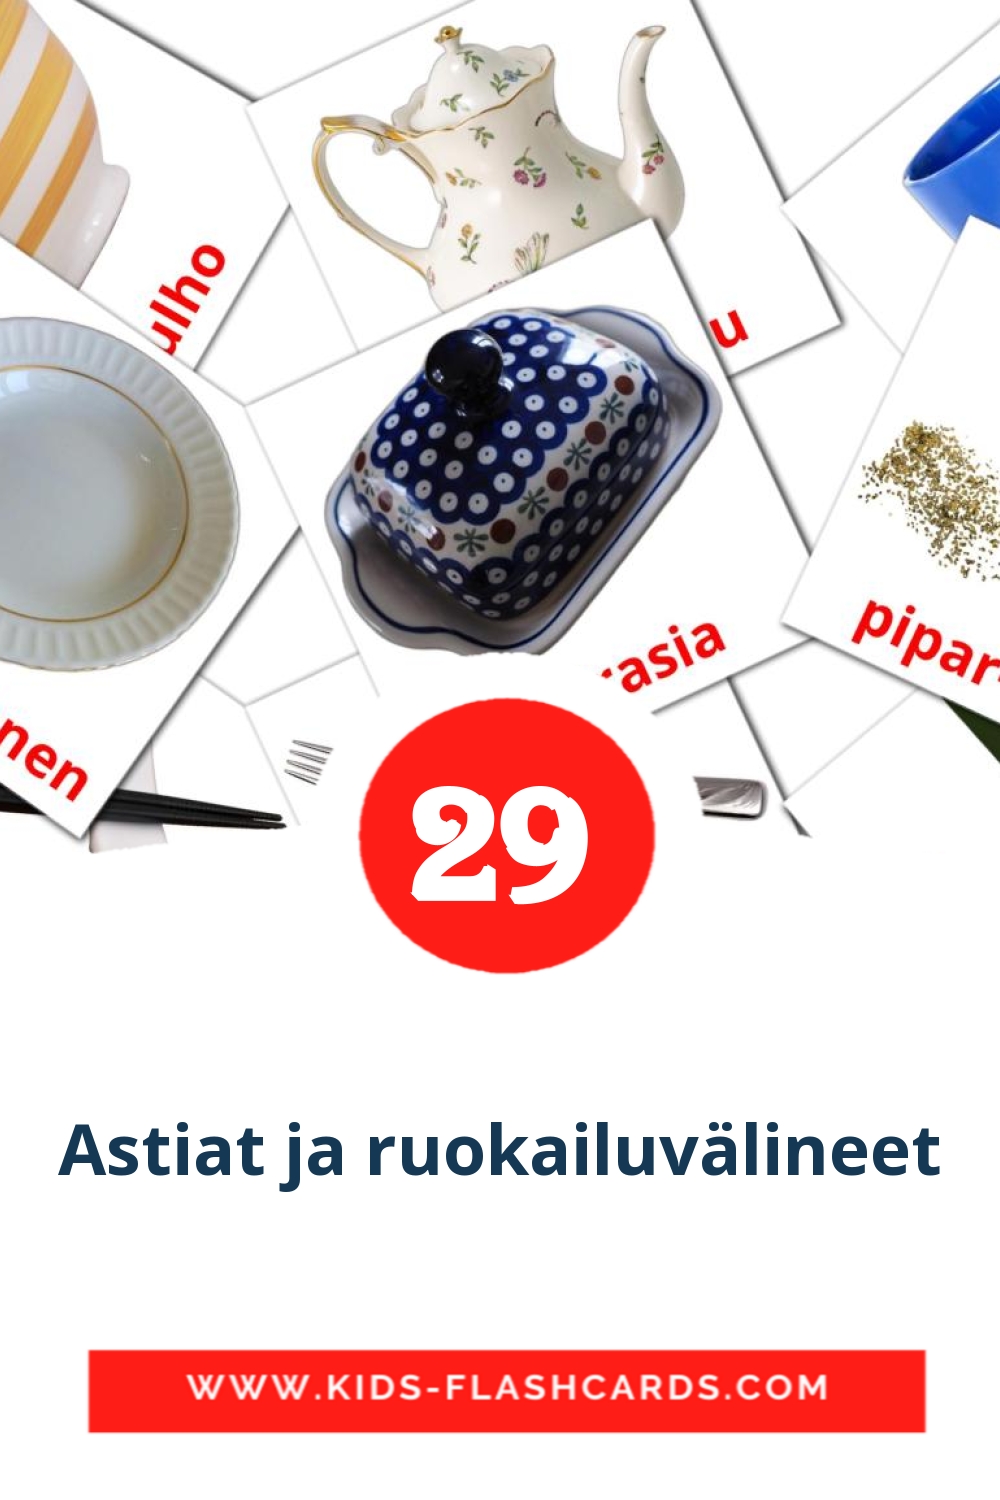 29 carte illustrate di Astiat ja ruokailuvälineet per la scuola materna in finlandese